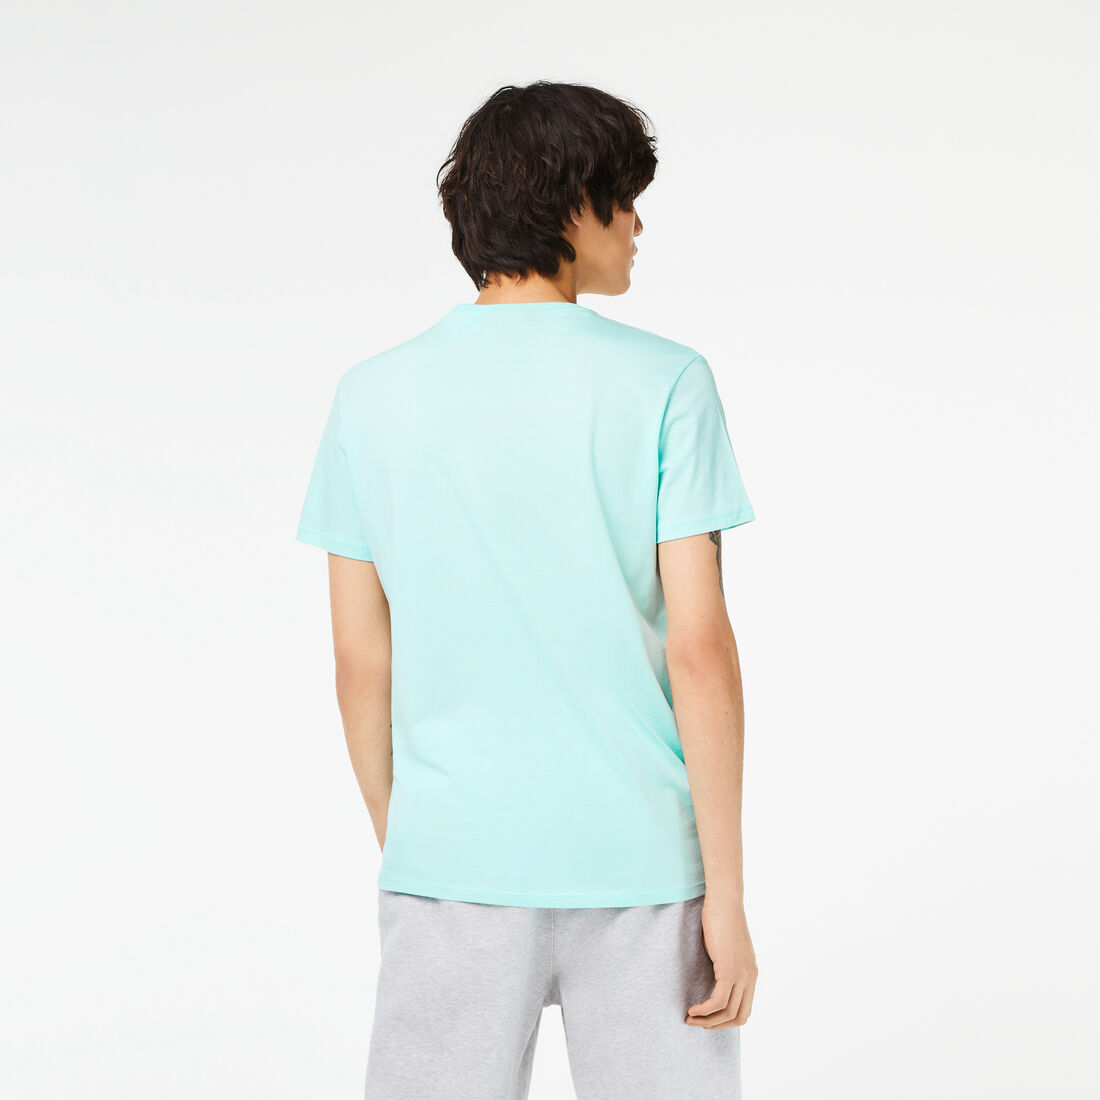 Lacoste - Pima Cotton Jersey T-Shirt, V-Neck - Light Green